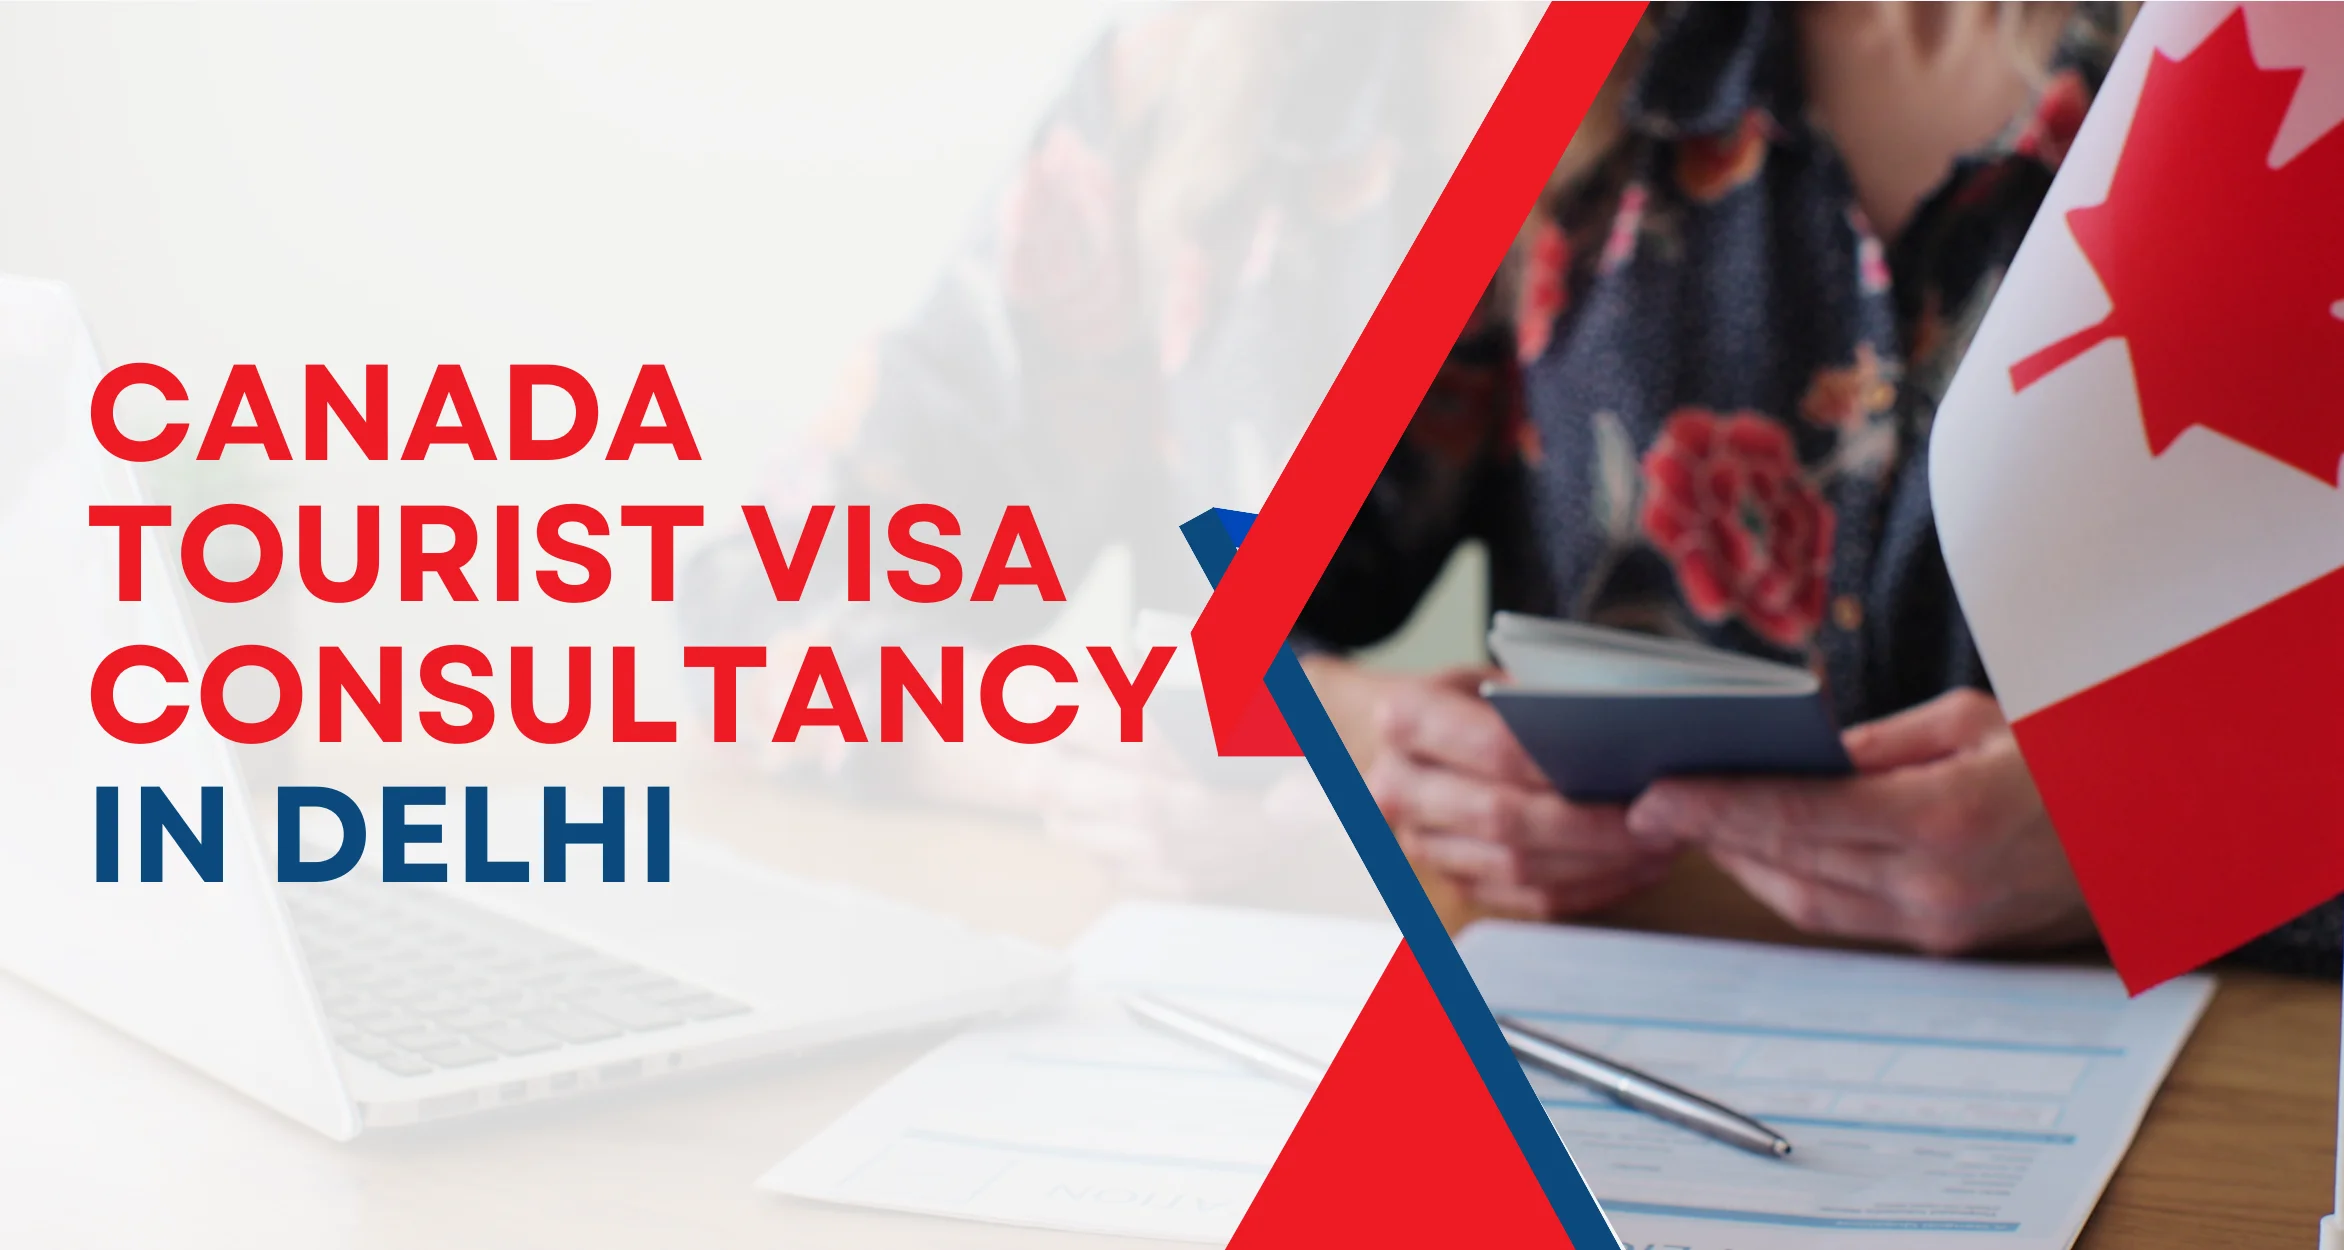 Canada tourist visa consultancy in Delhi